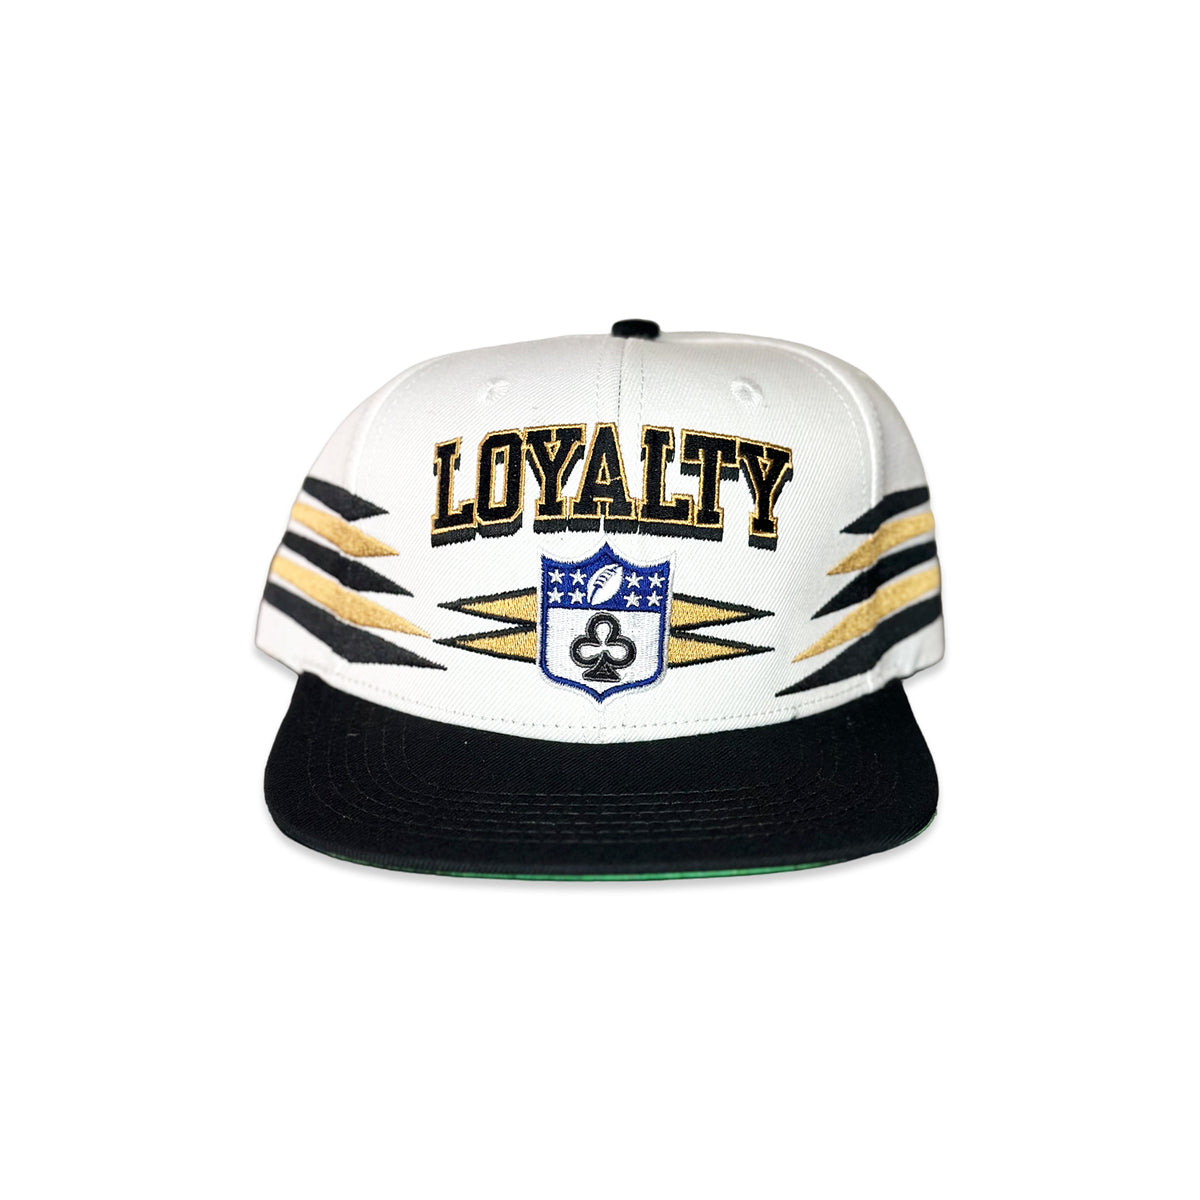 Loyalty Iz Rare Snapback Hats – LOYALTY IZ RARE